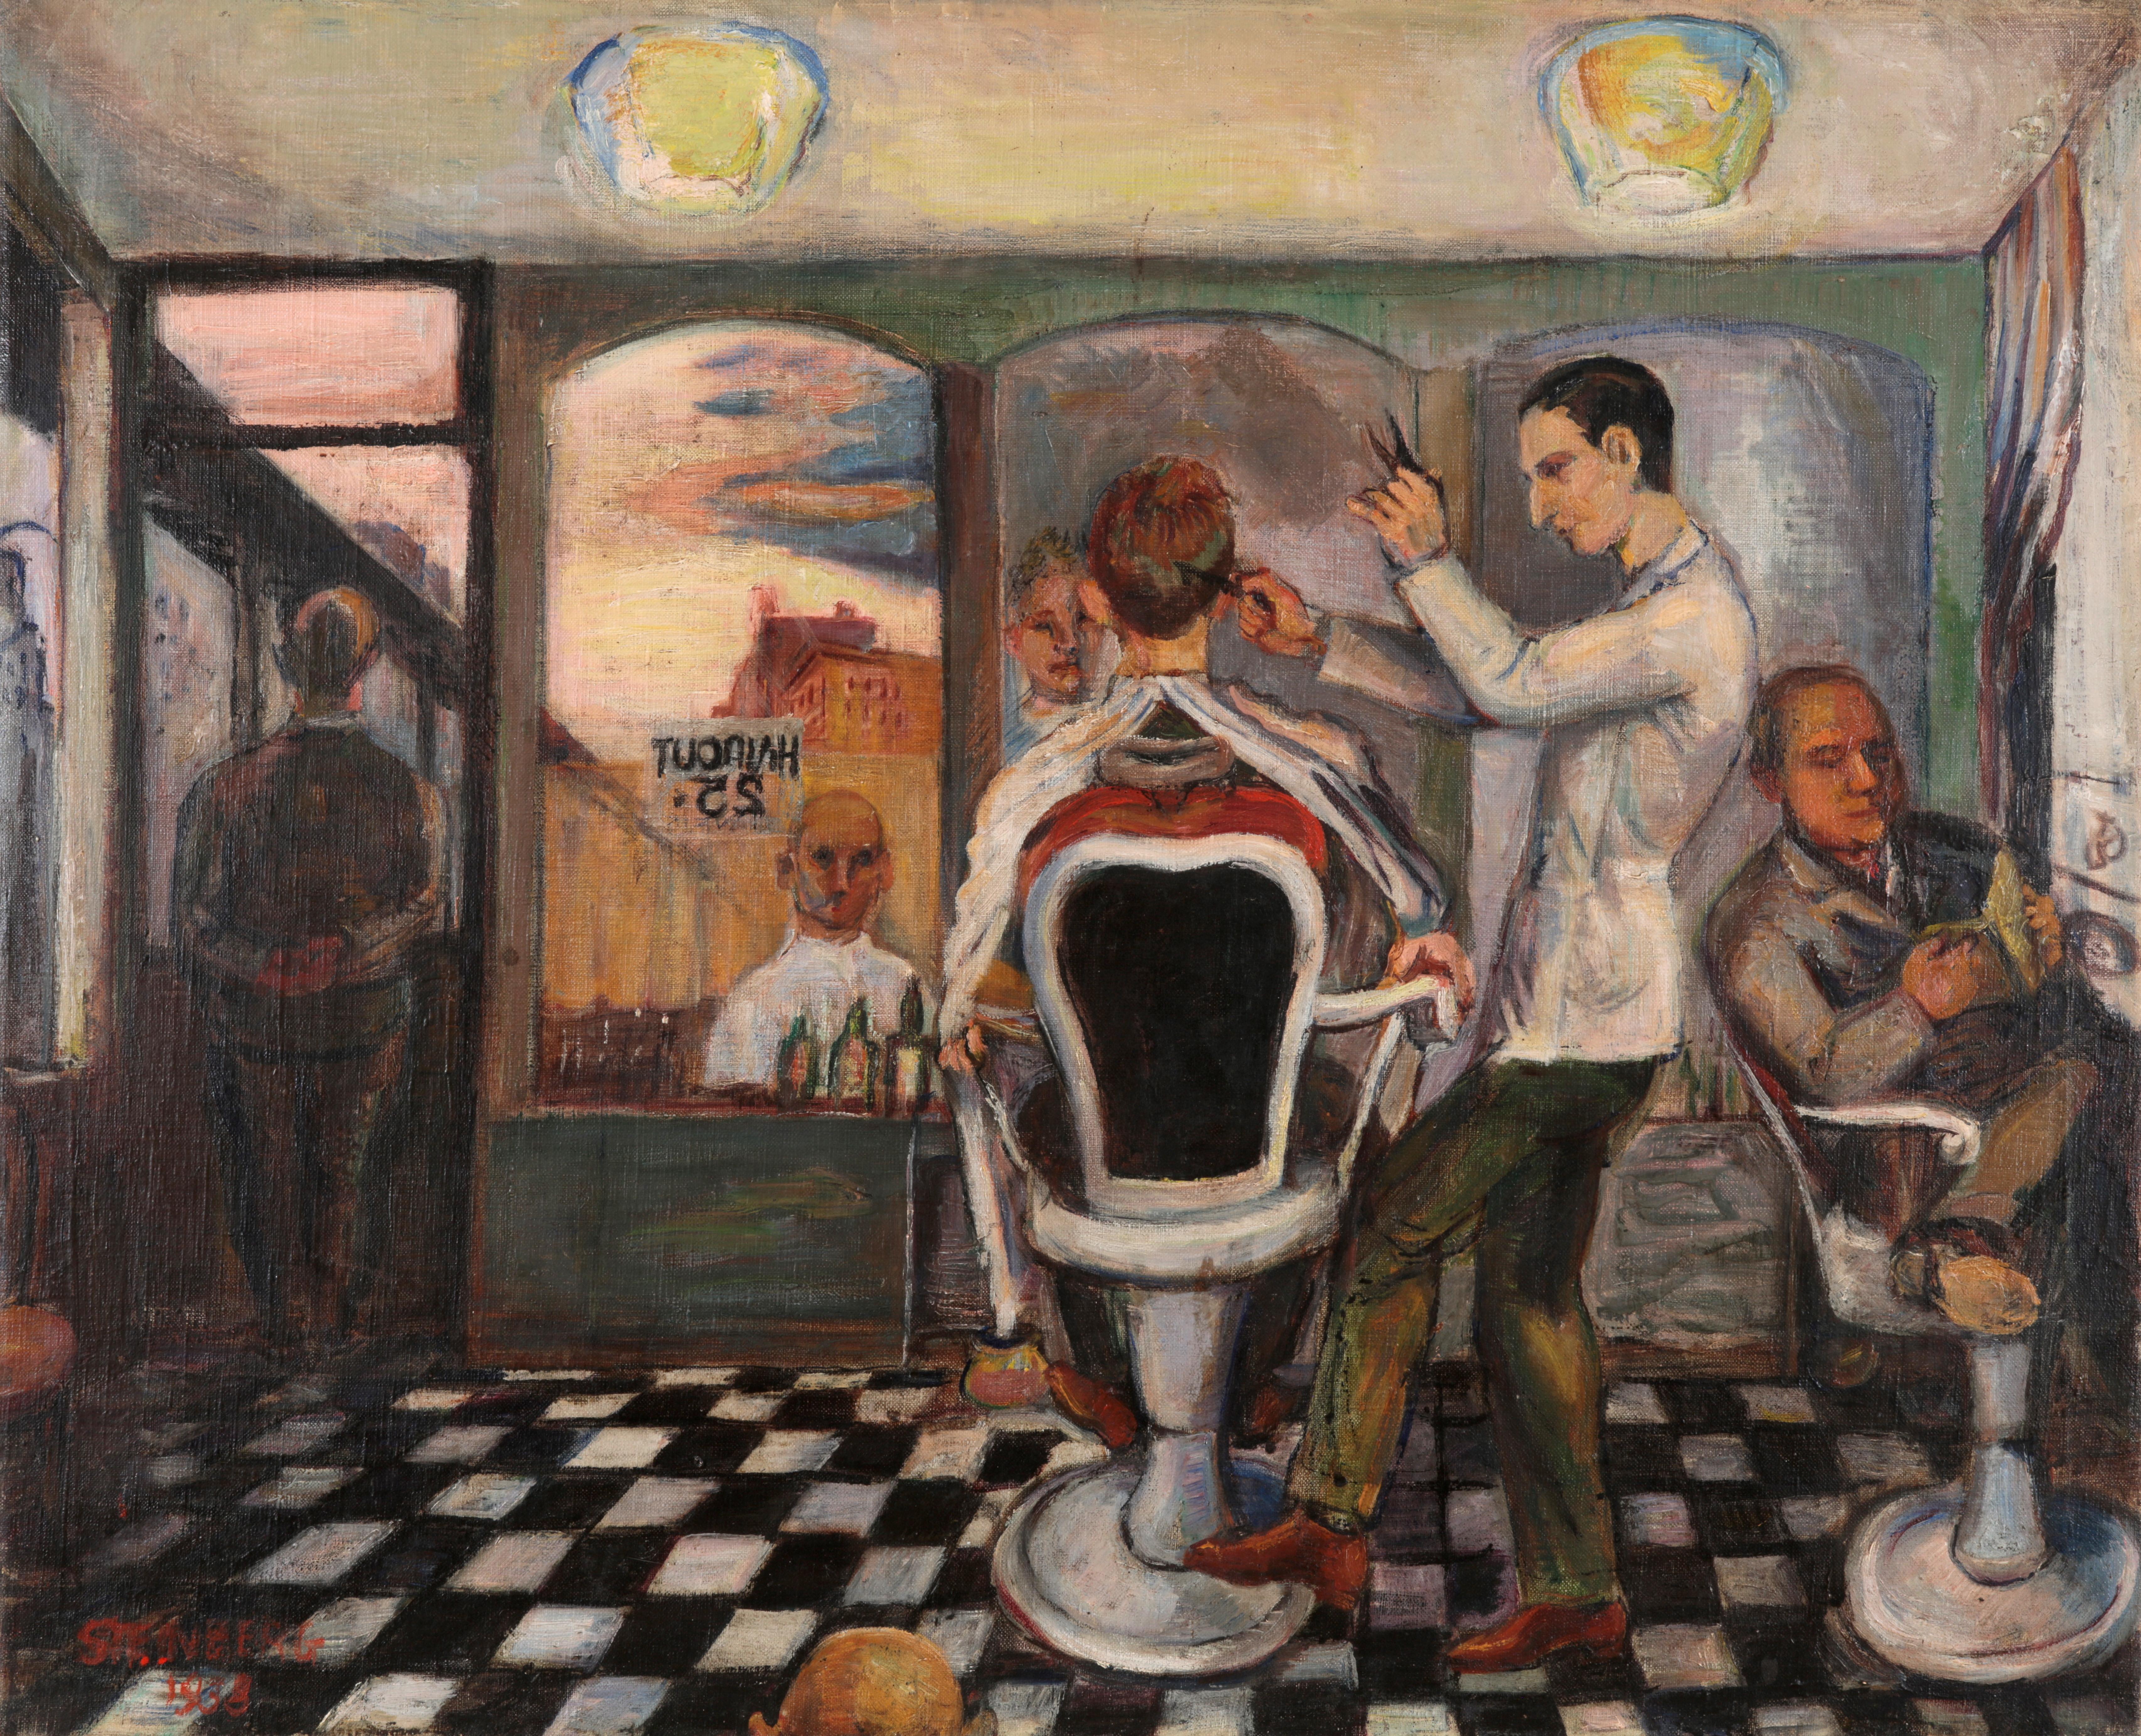 Harry Sternberg Figurative Painting - "Barber Shop" Mid 20th Century American Scene Social Realism WPA Modernism NYC